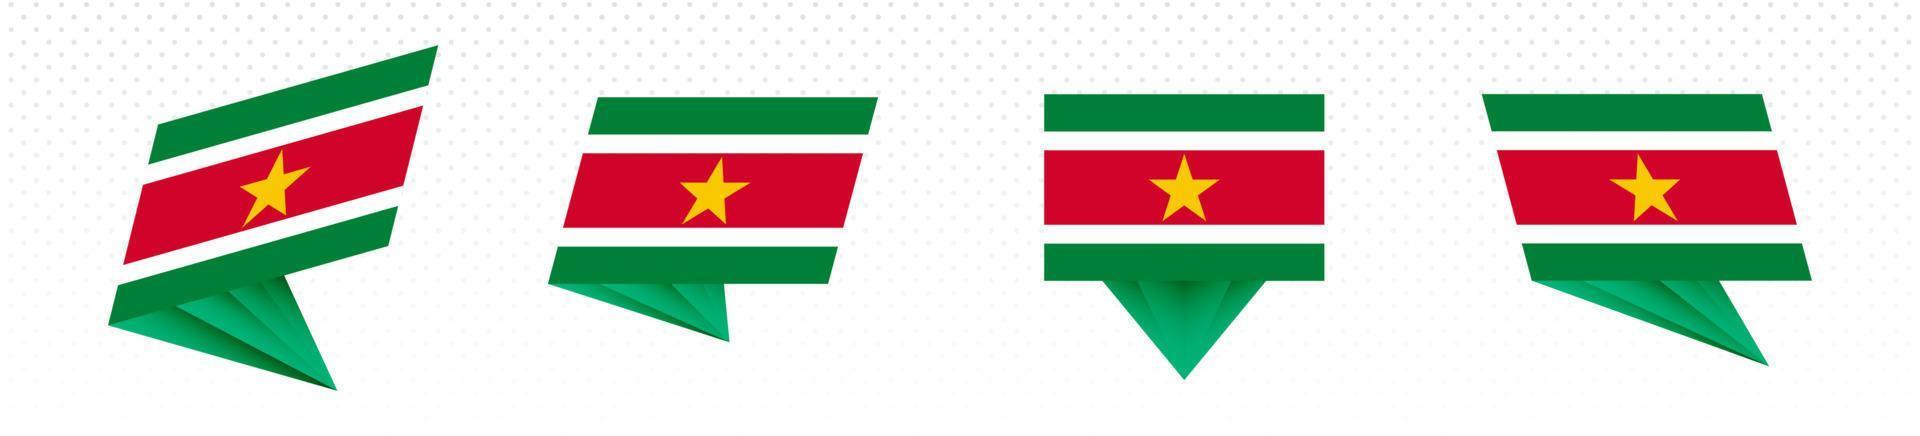 vlag van Suriname in modern abstract ontwerp, vlag set. vector